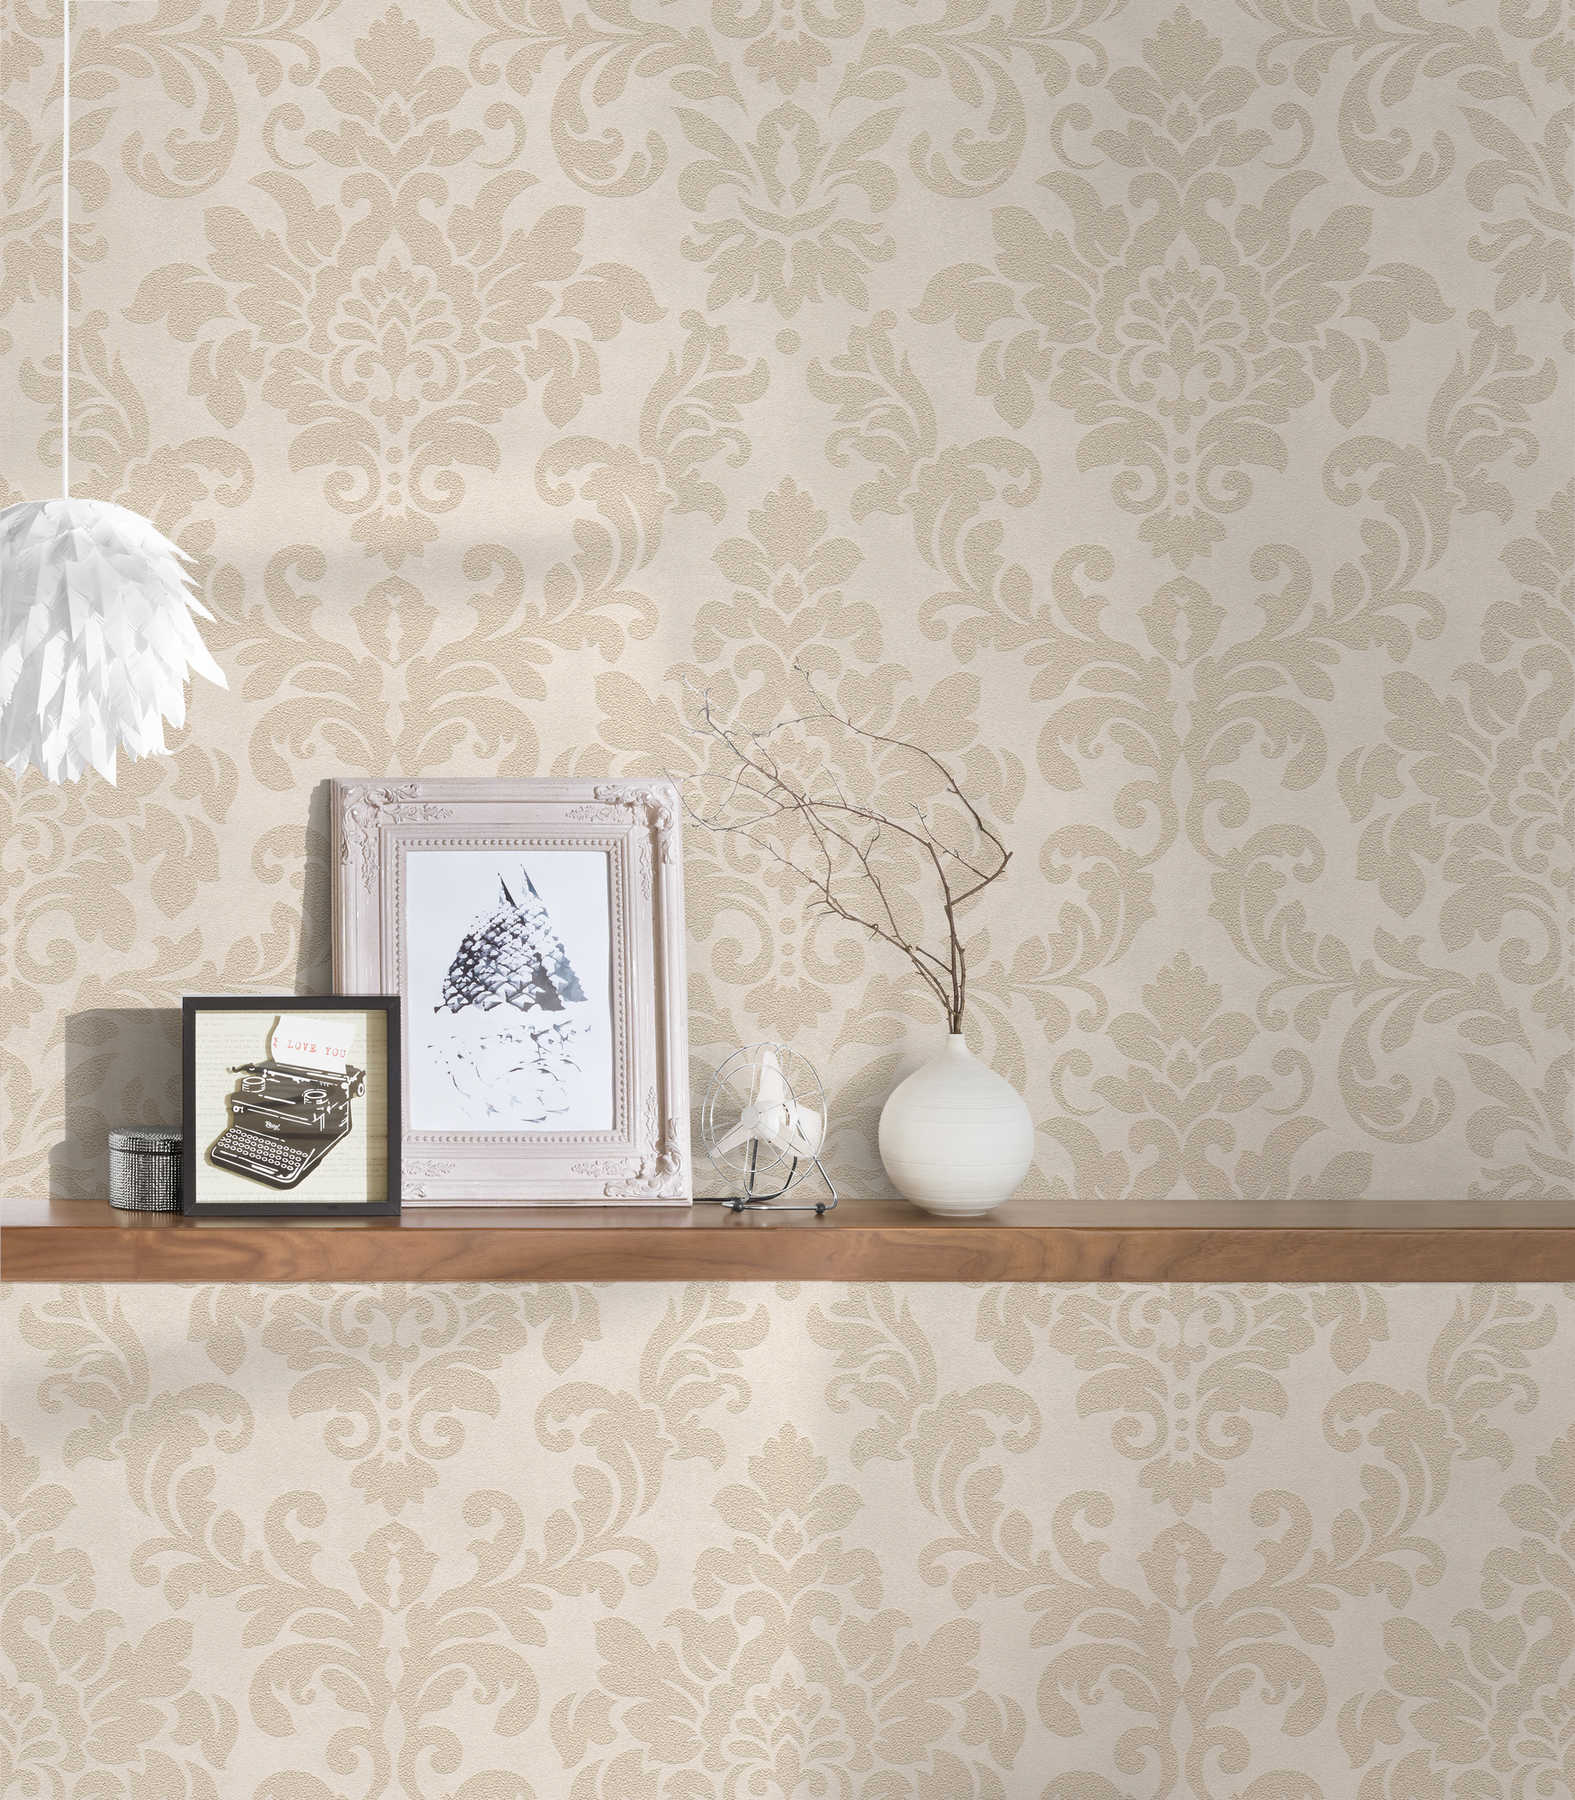             Floral ornamental wallpaper with metallic effect - beige, cream, gold
        